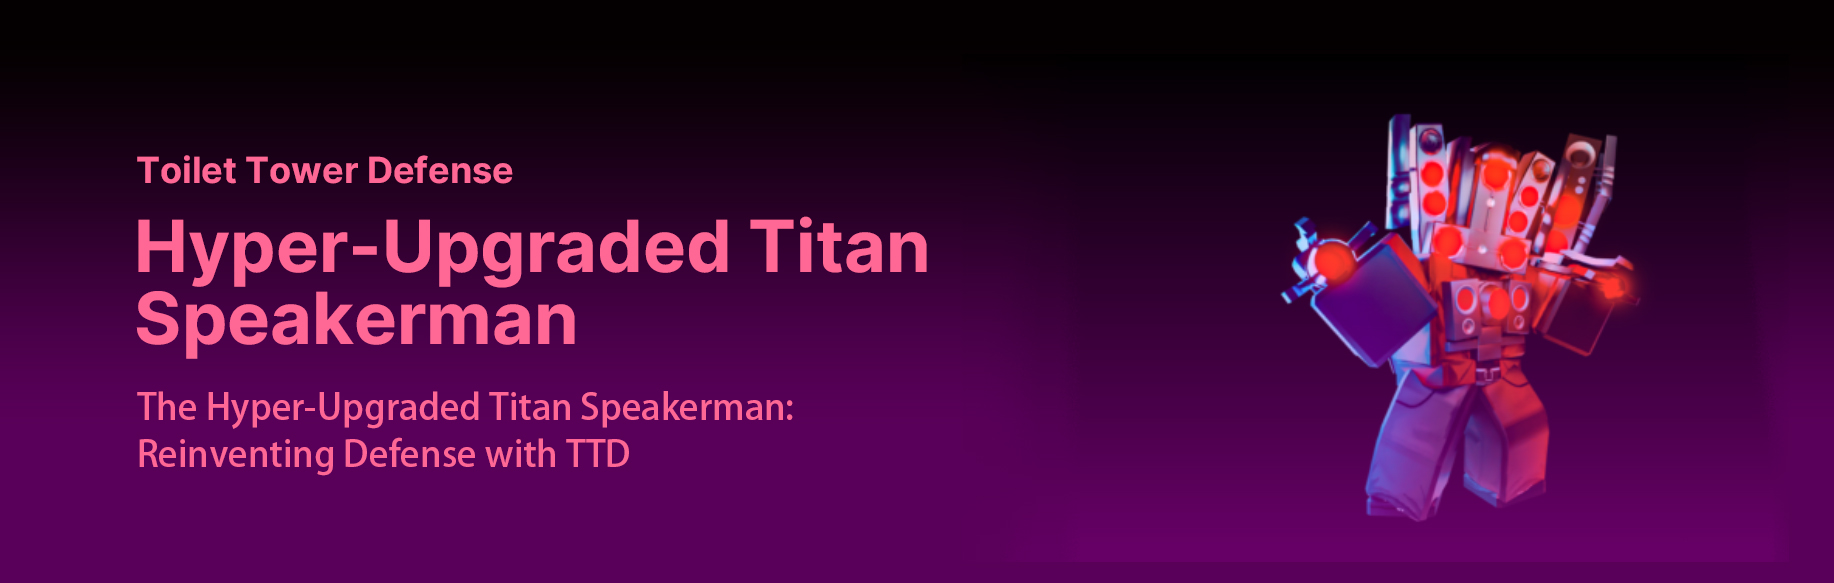  The Hyper-Upgraded Titan Speakerman: Reinventing Defense with TTD